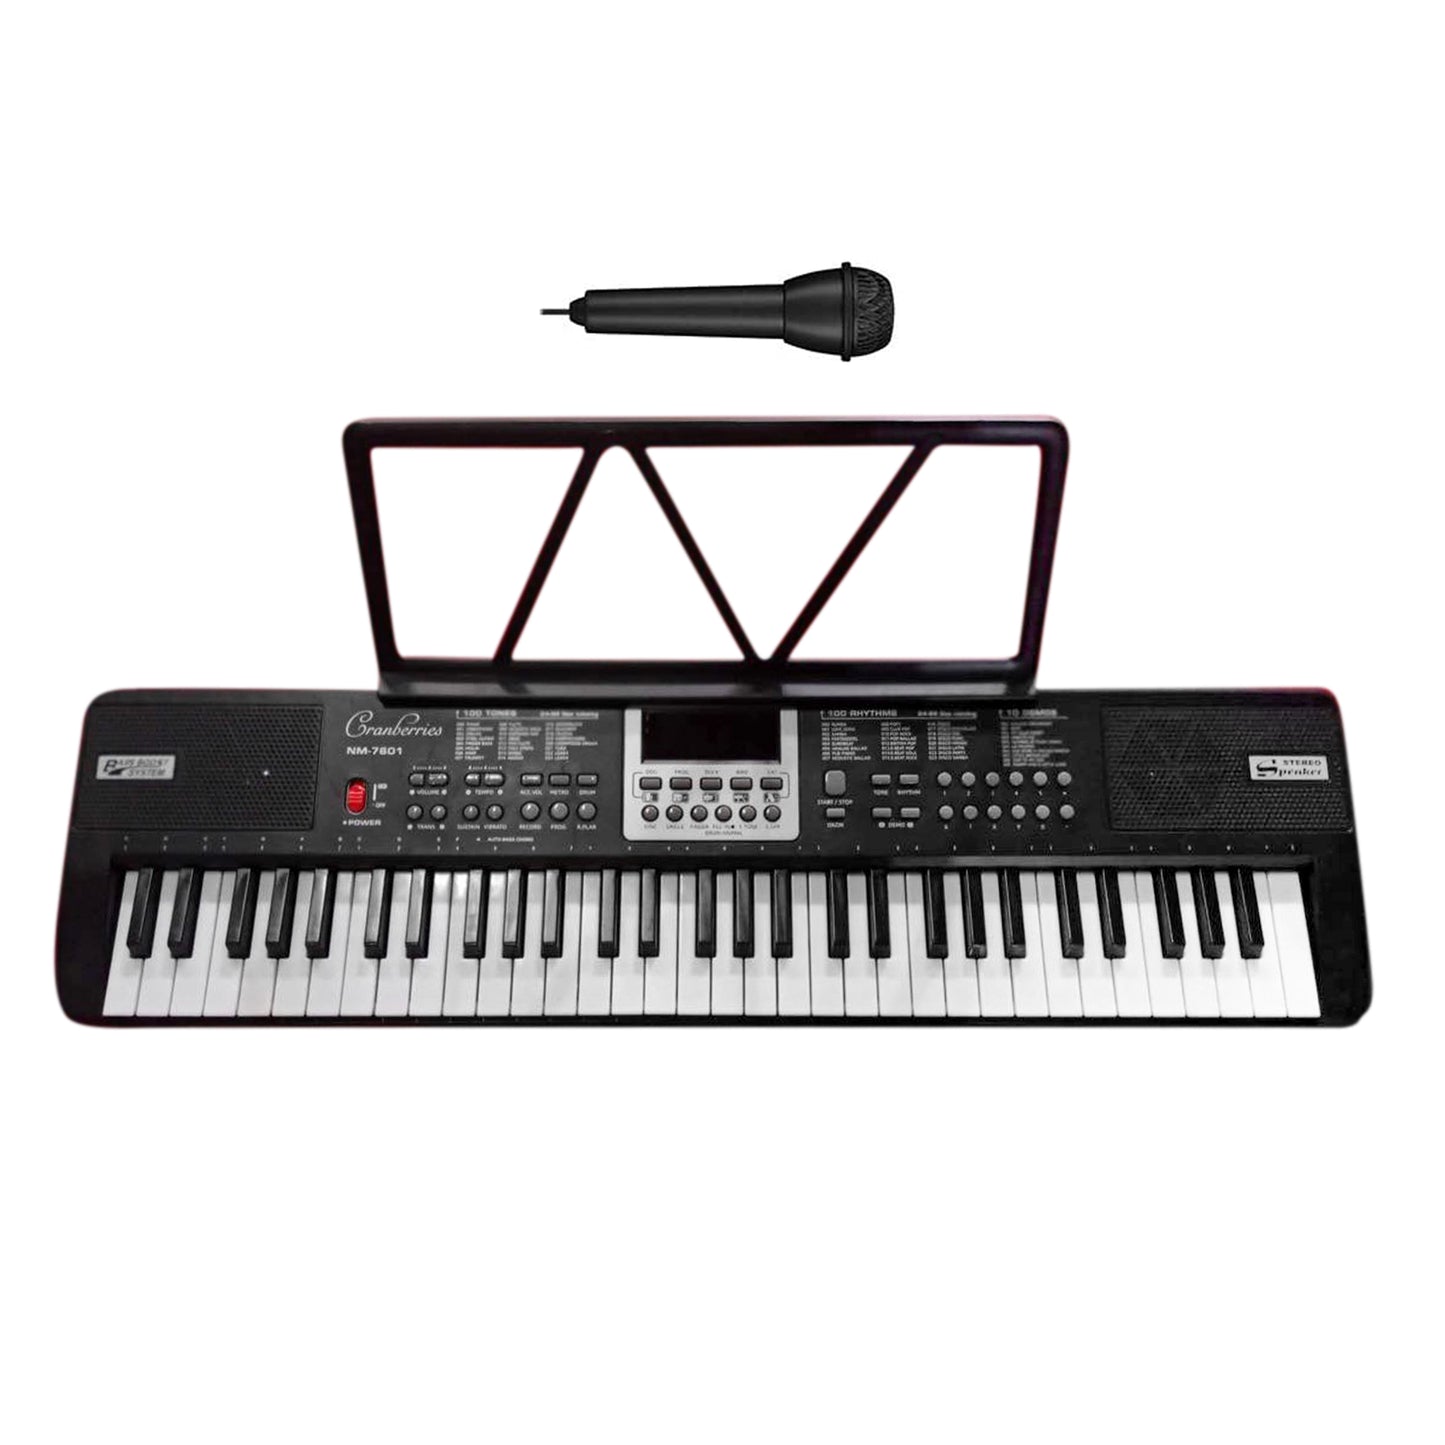 Cranberries 8601 61 Keys Electronic Keyboard Piano Organ